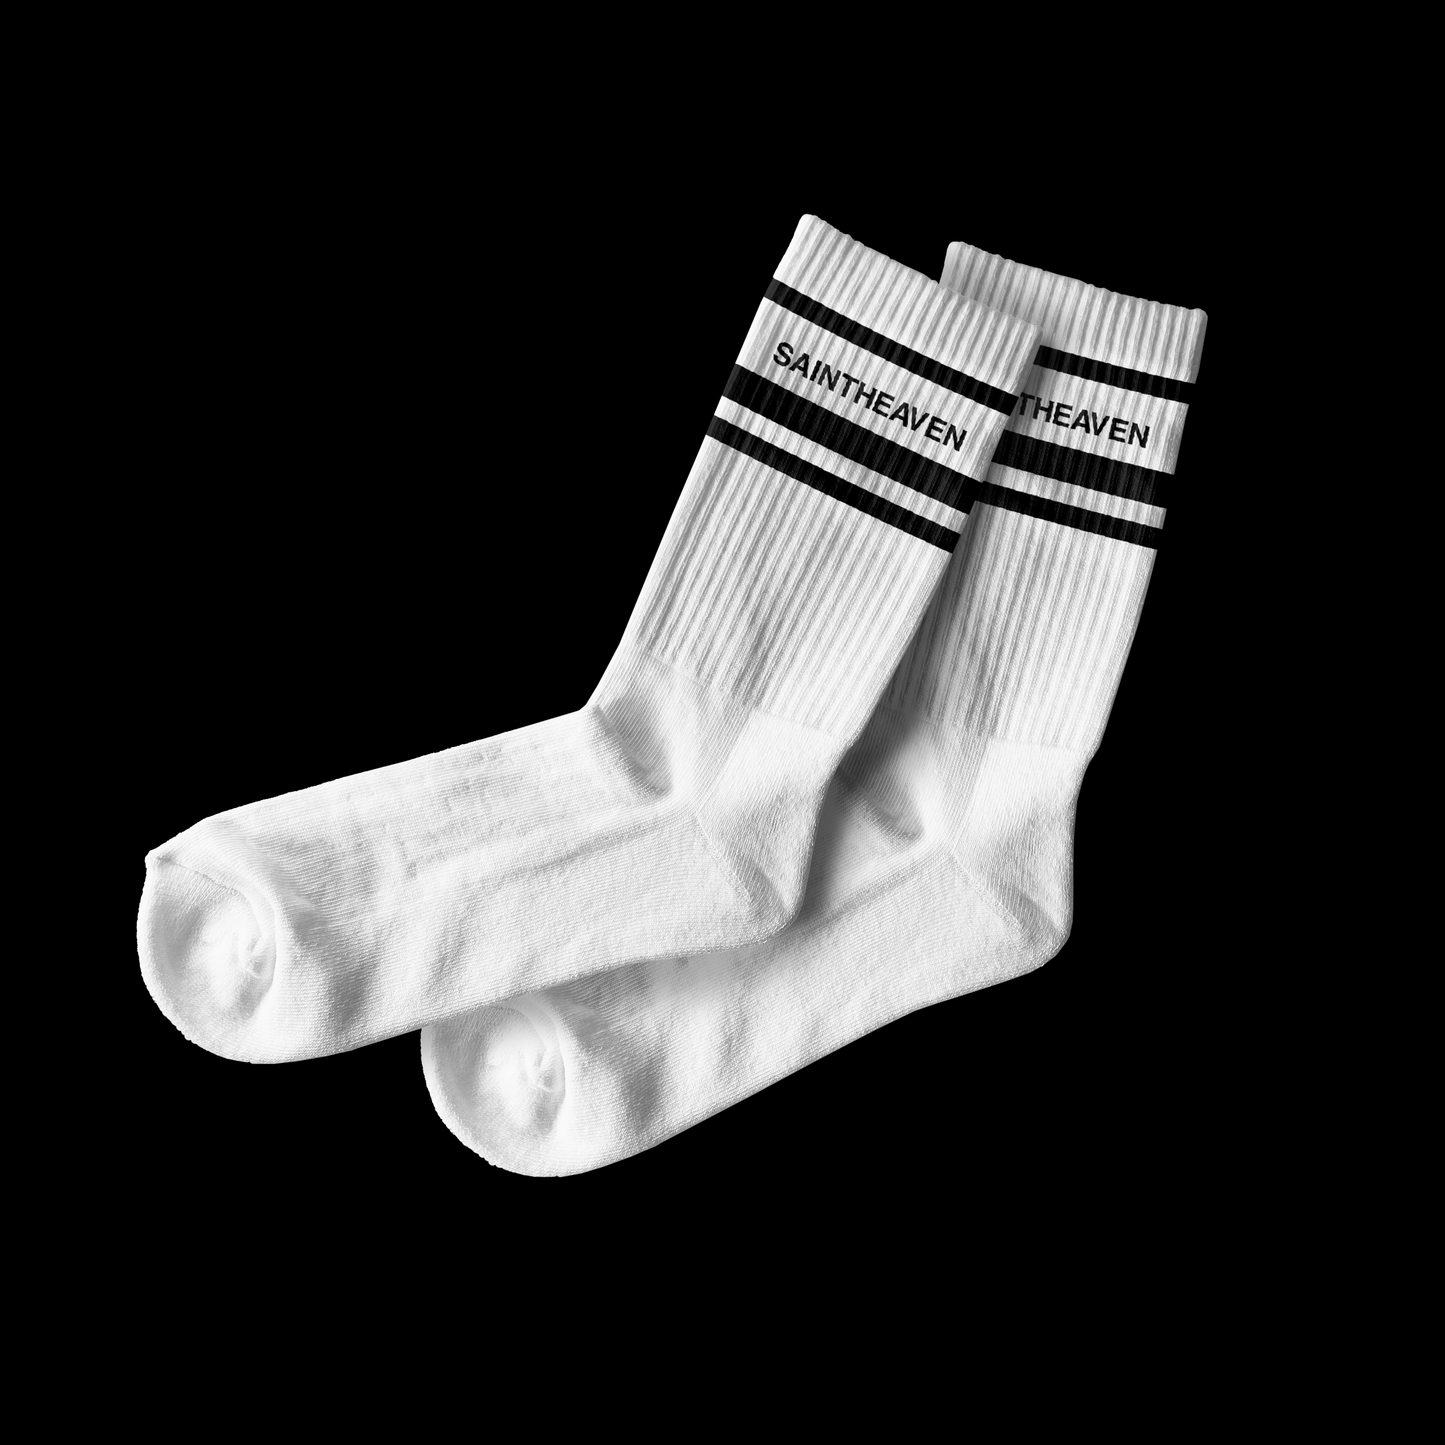 Saint Heaven - White Crew Socks With Black Piping